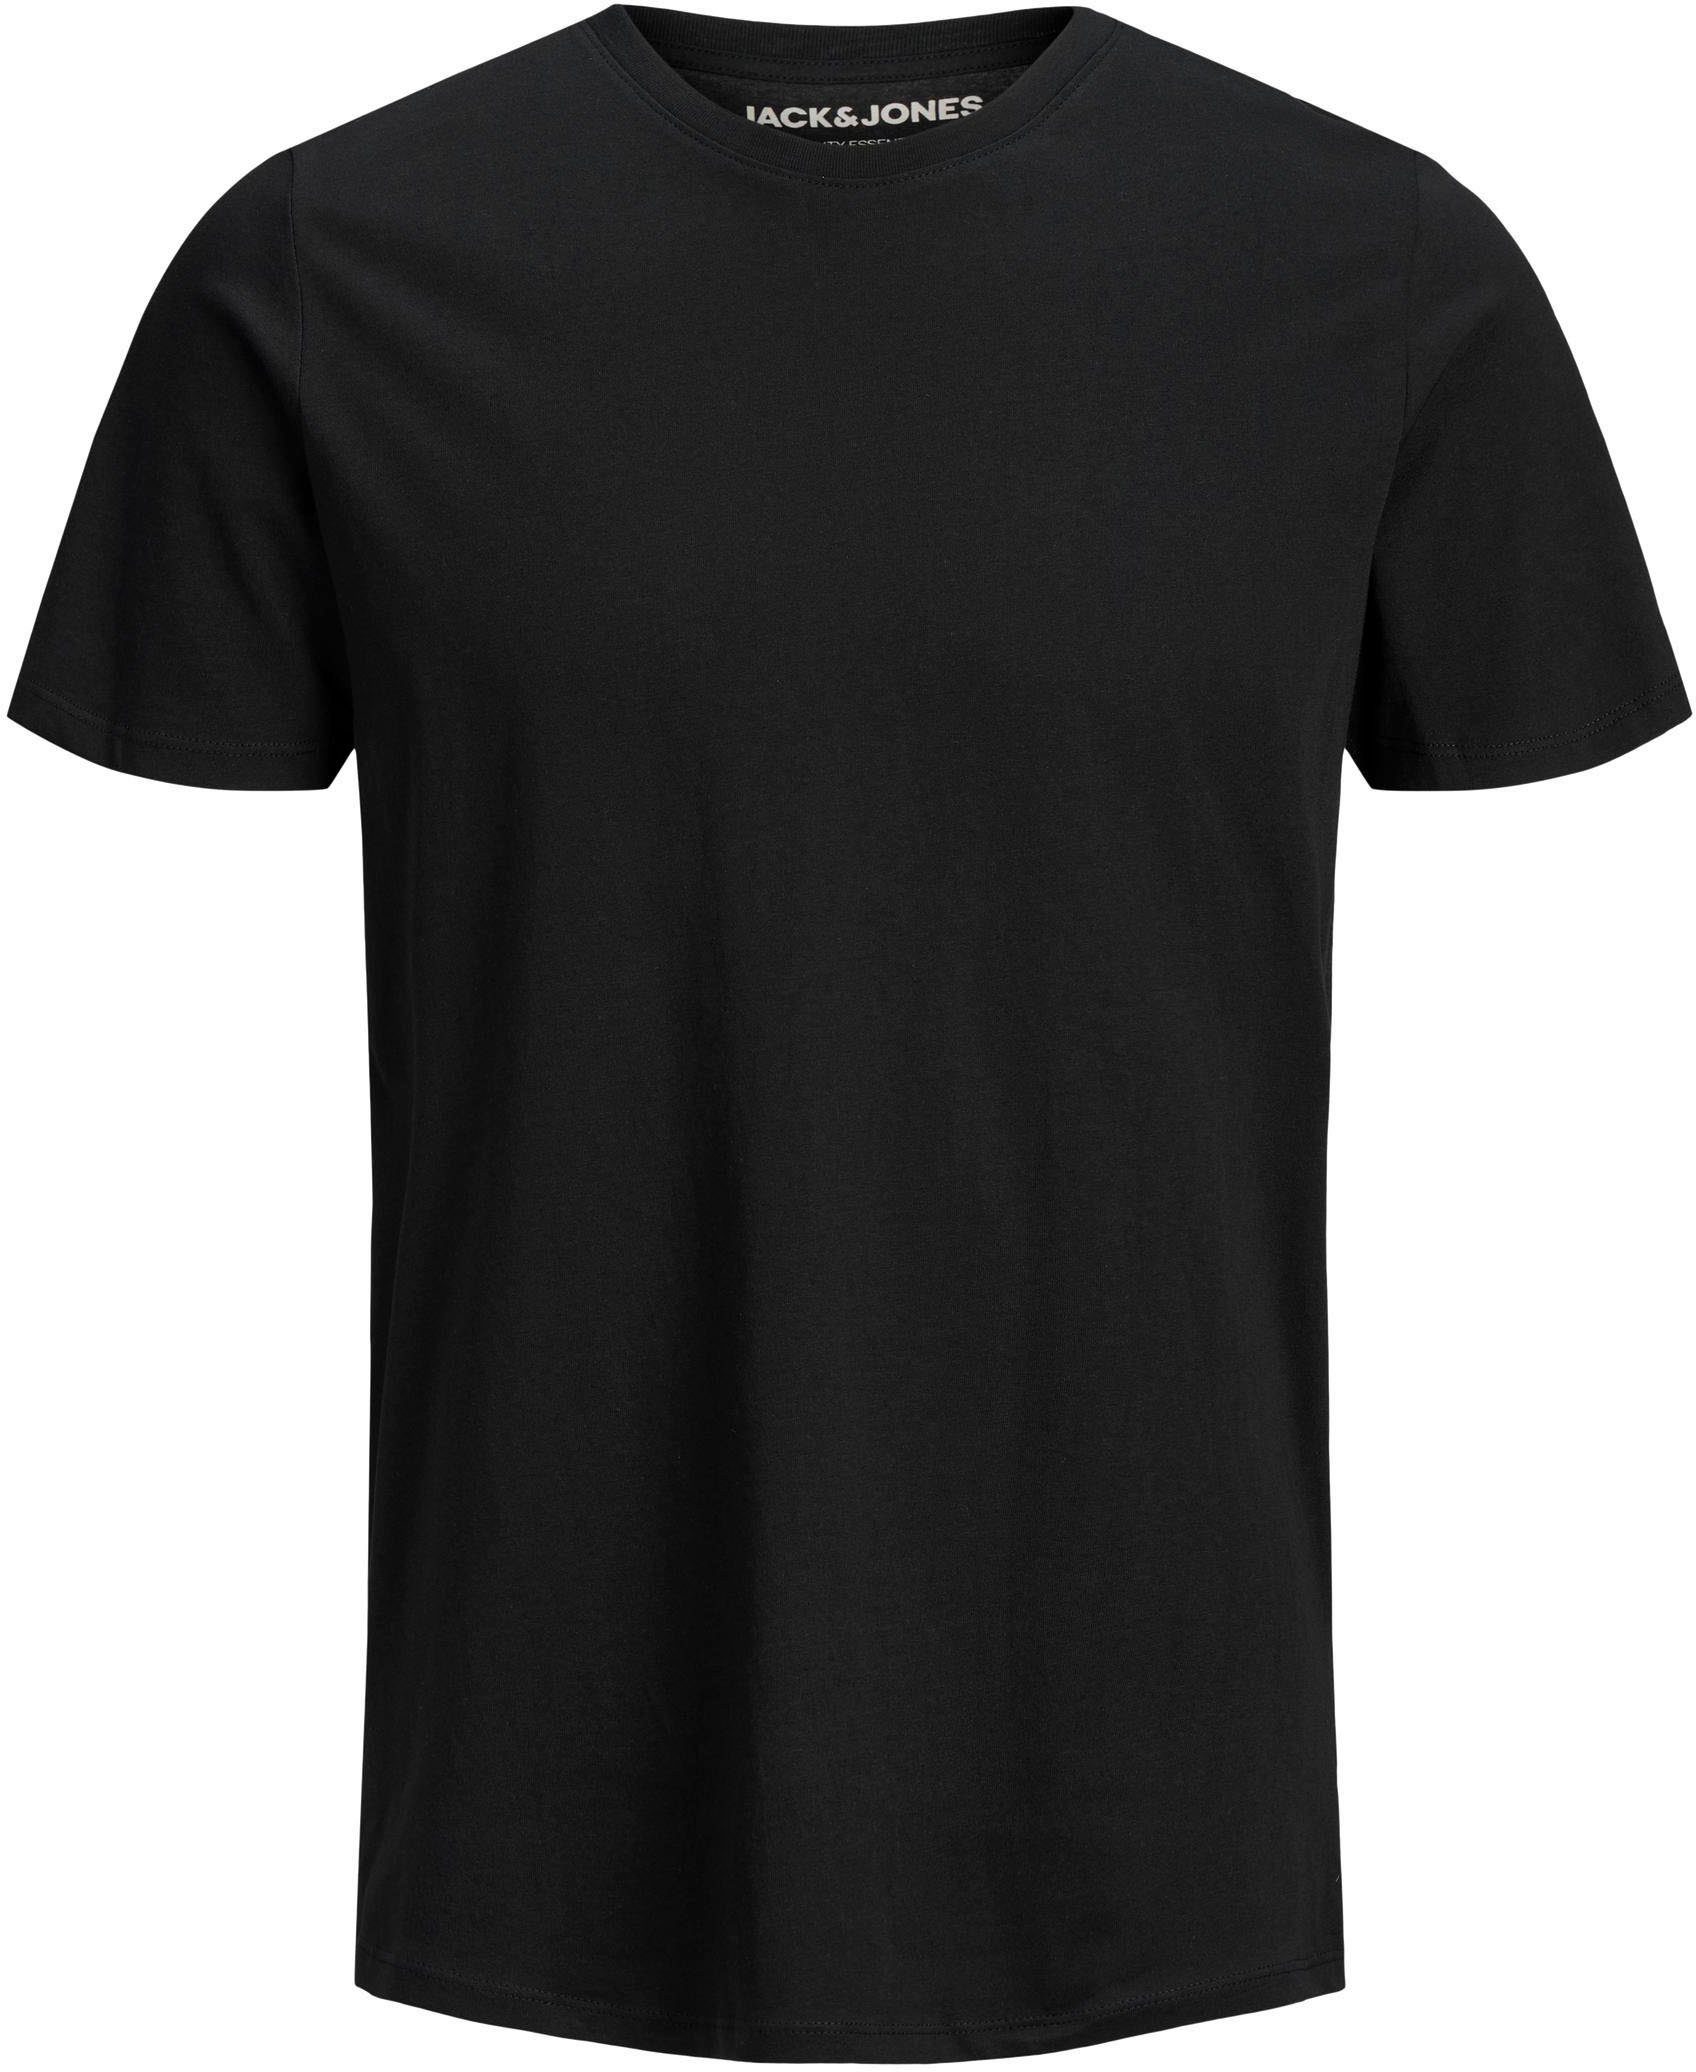 Jack & Jones TEE ORGANIC (Packung, BASIC 3-tlg) Rundhalsshirt 3PK weiß, schwarz